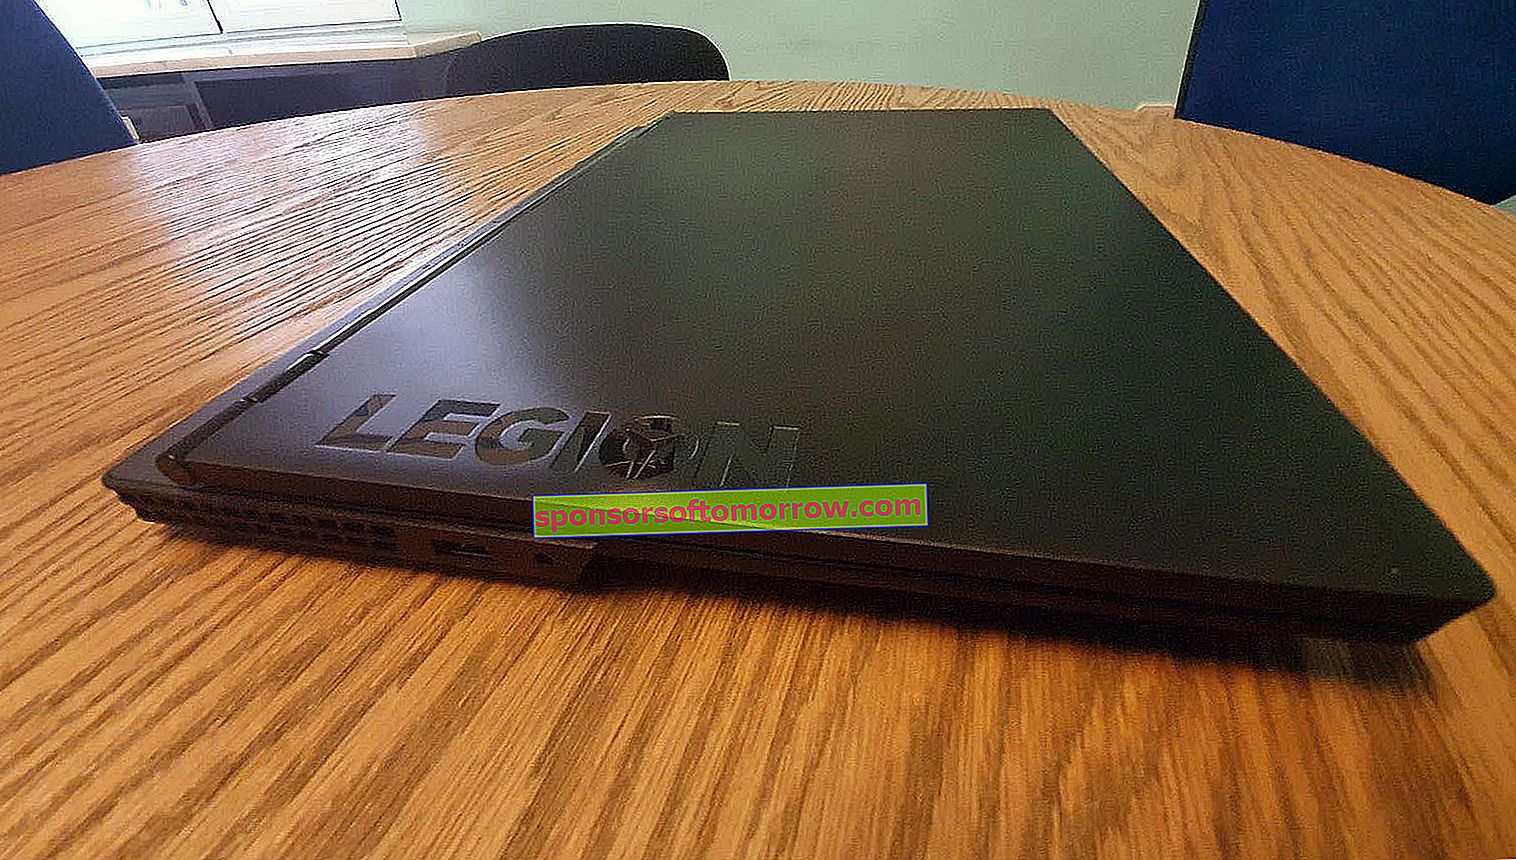 Lenovo-Legion-Y530 view from profile